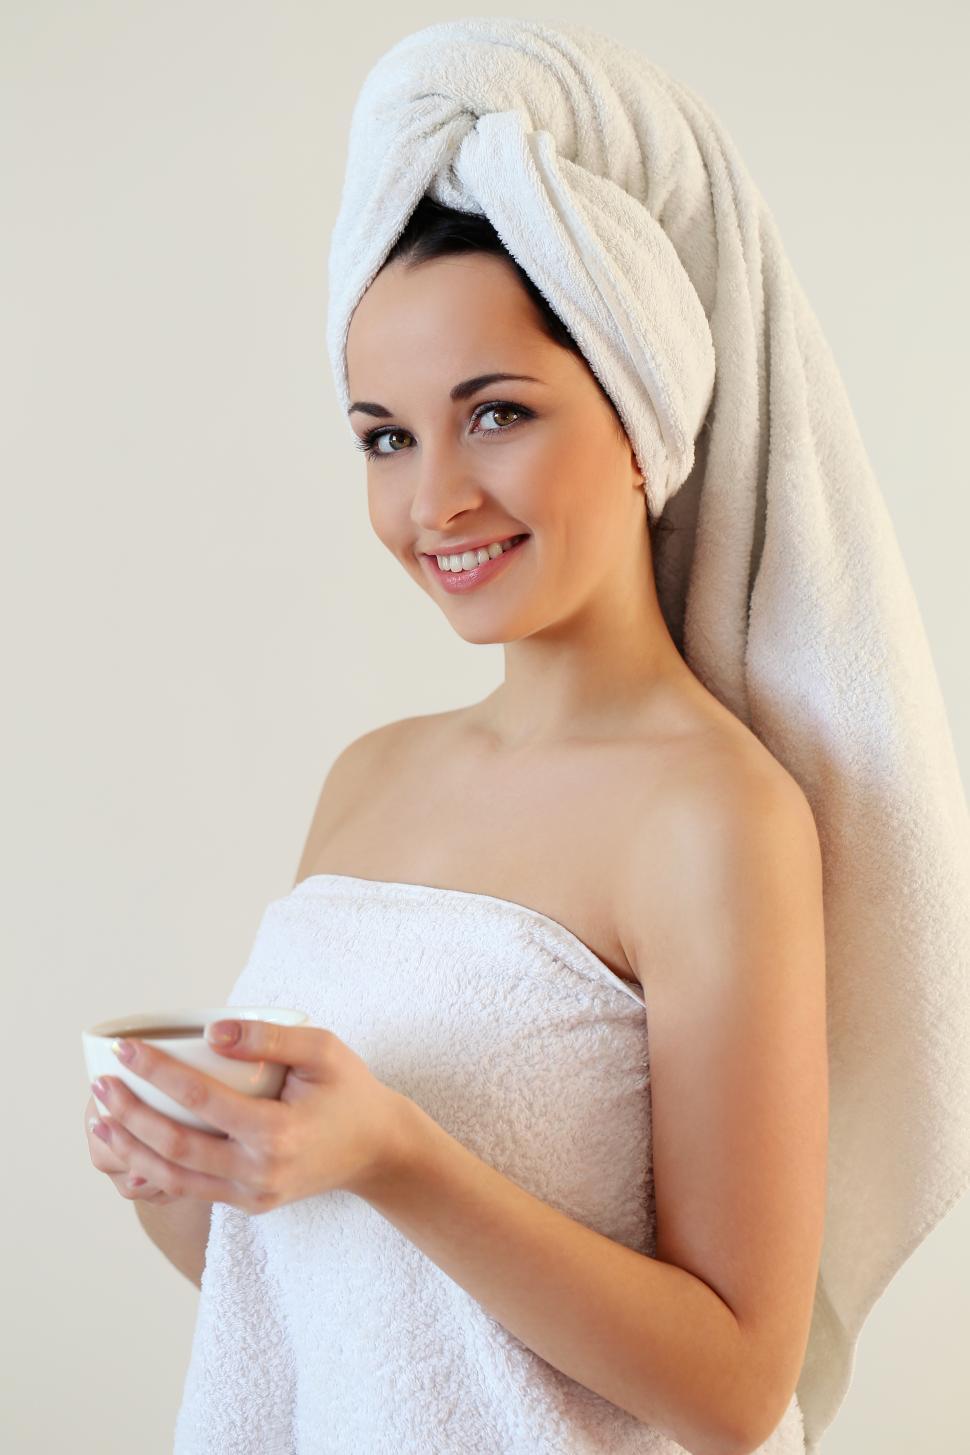 https://freerangestock.com/sample/138397/woman-in-towel-with-a-cup-of-coffee.jpg